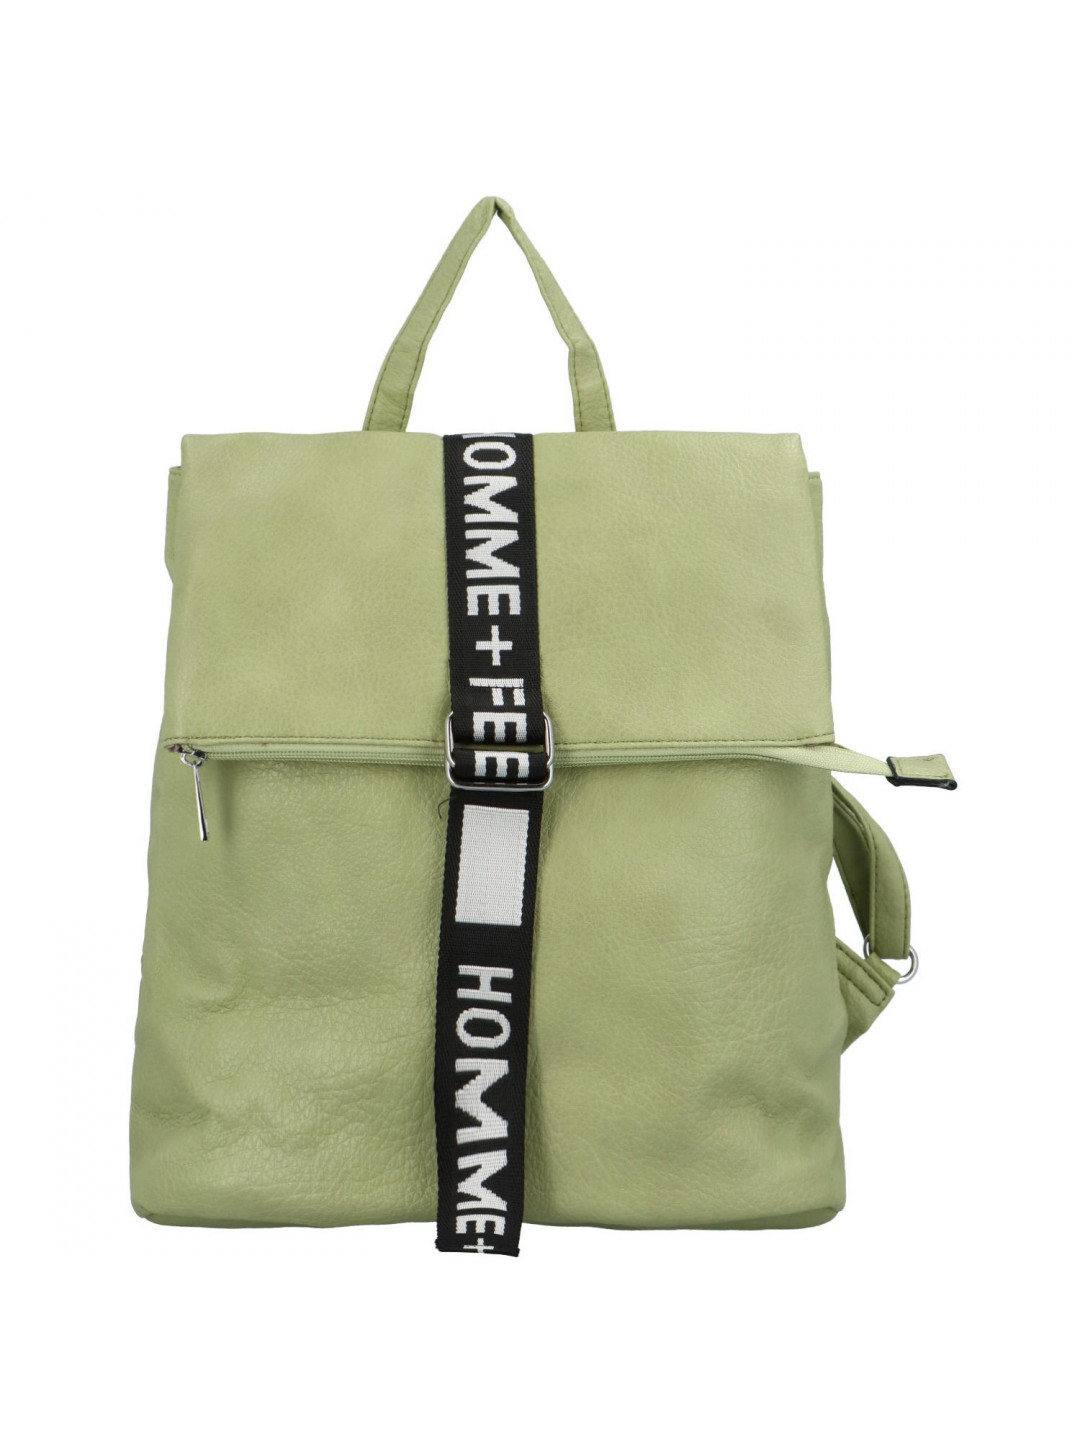 Trendový dámský koženkový batoh Pelias pastelově zelená